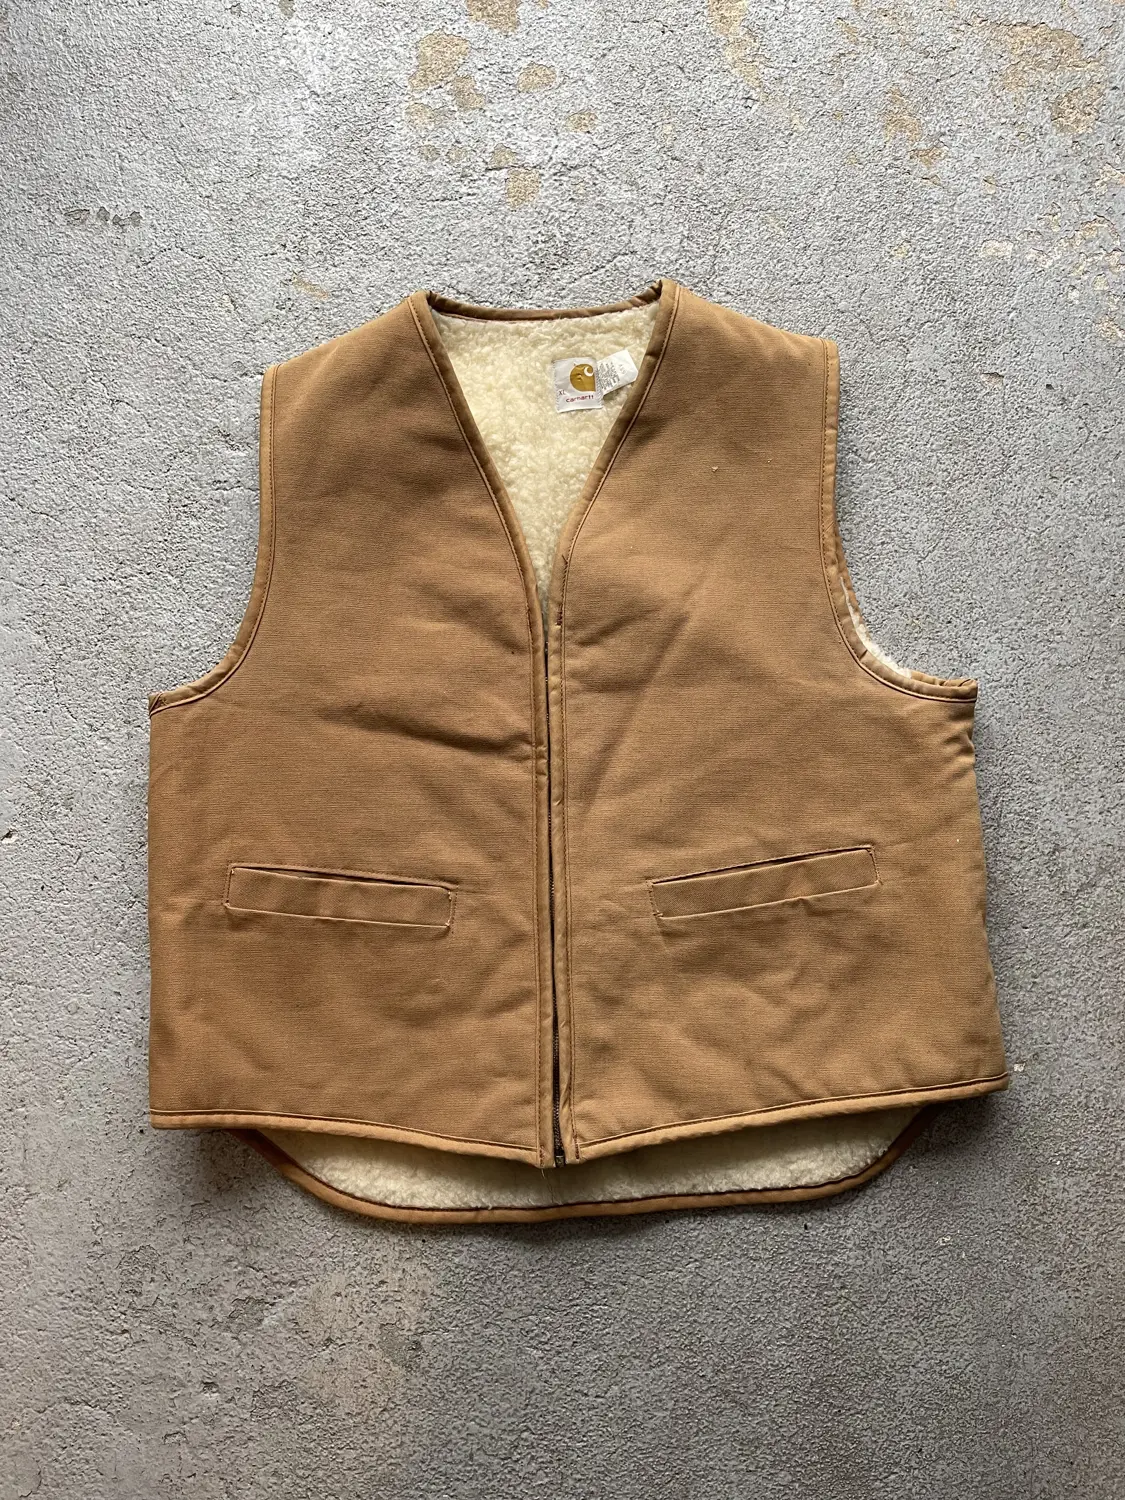 Vintage 80s Carhartt Vest